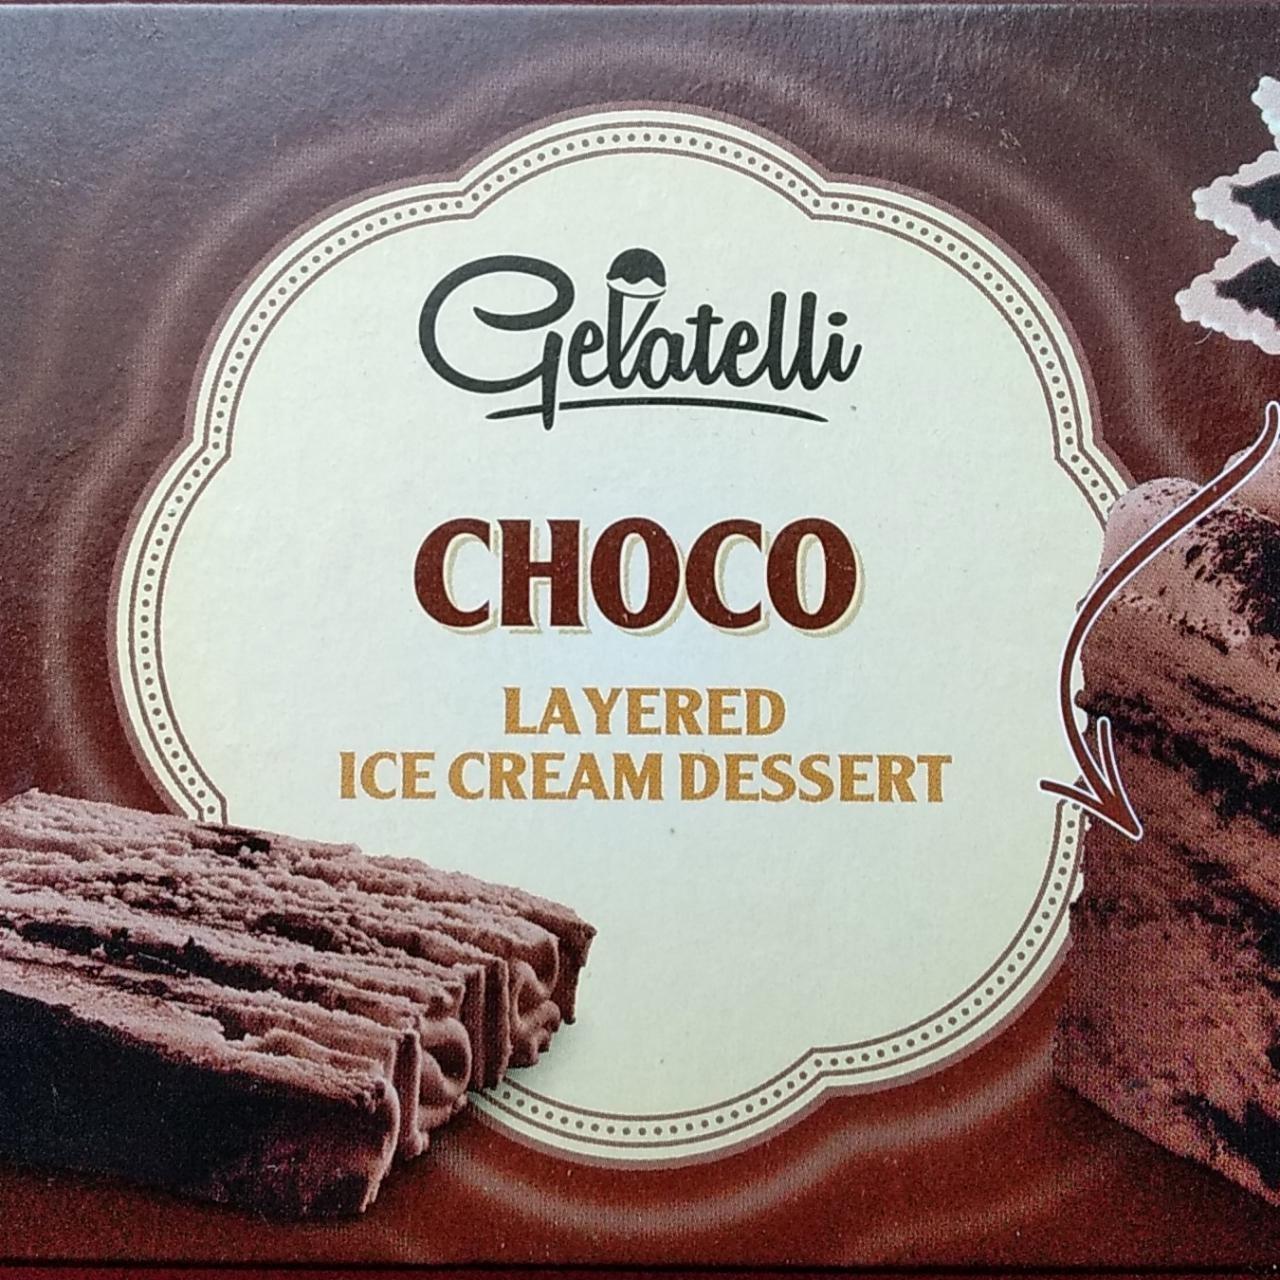 Képek - Choco layered ice cream dessert Gelatelli